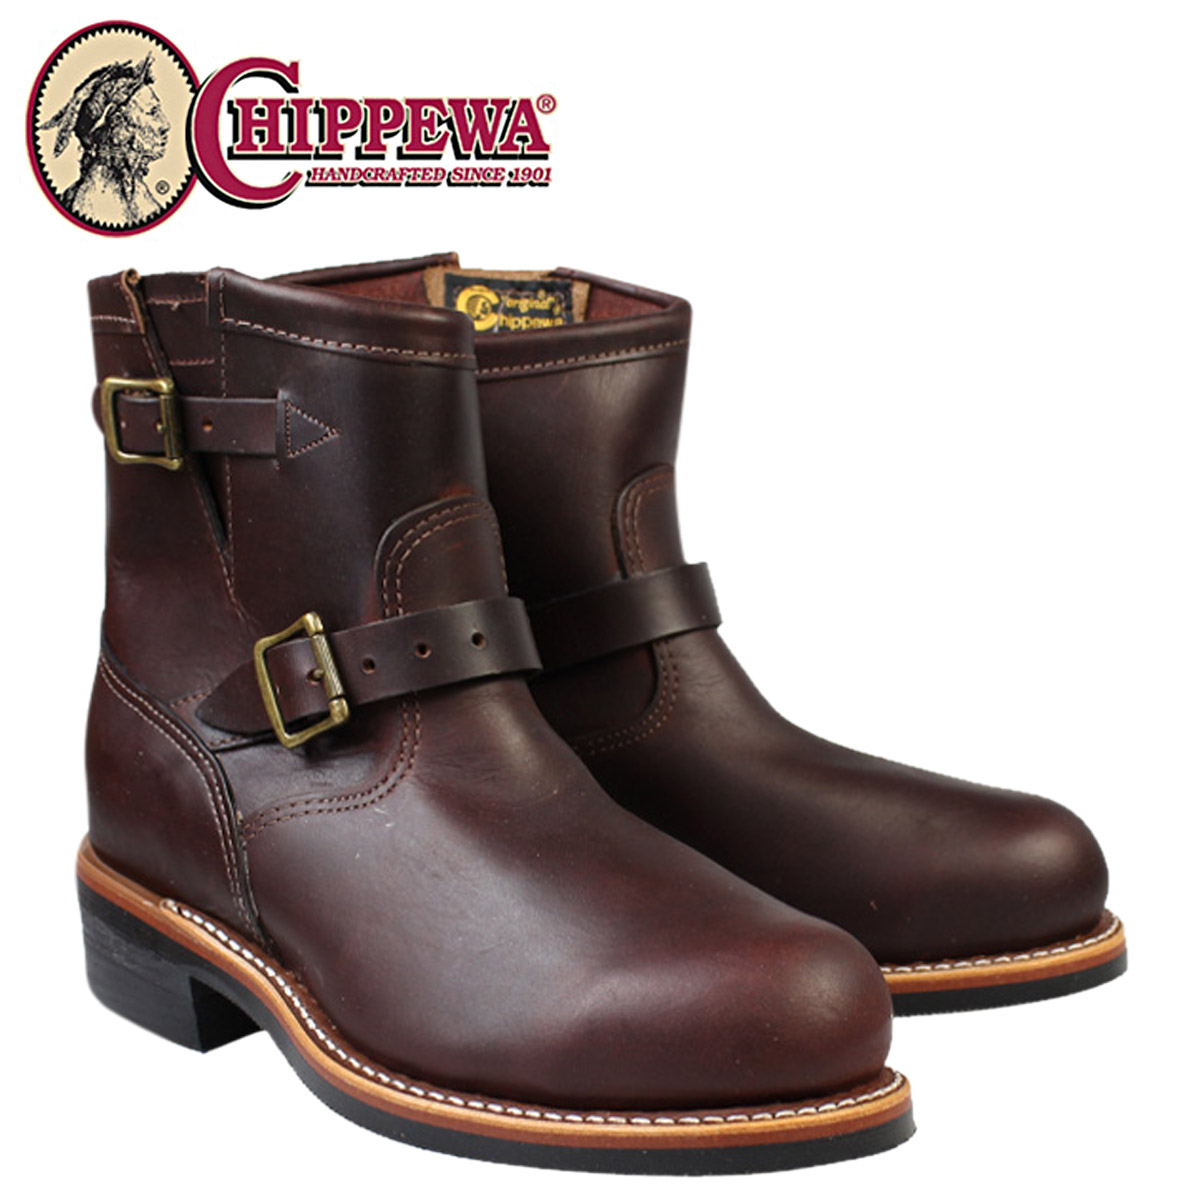 chippewa engineer boots